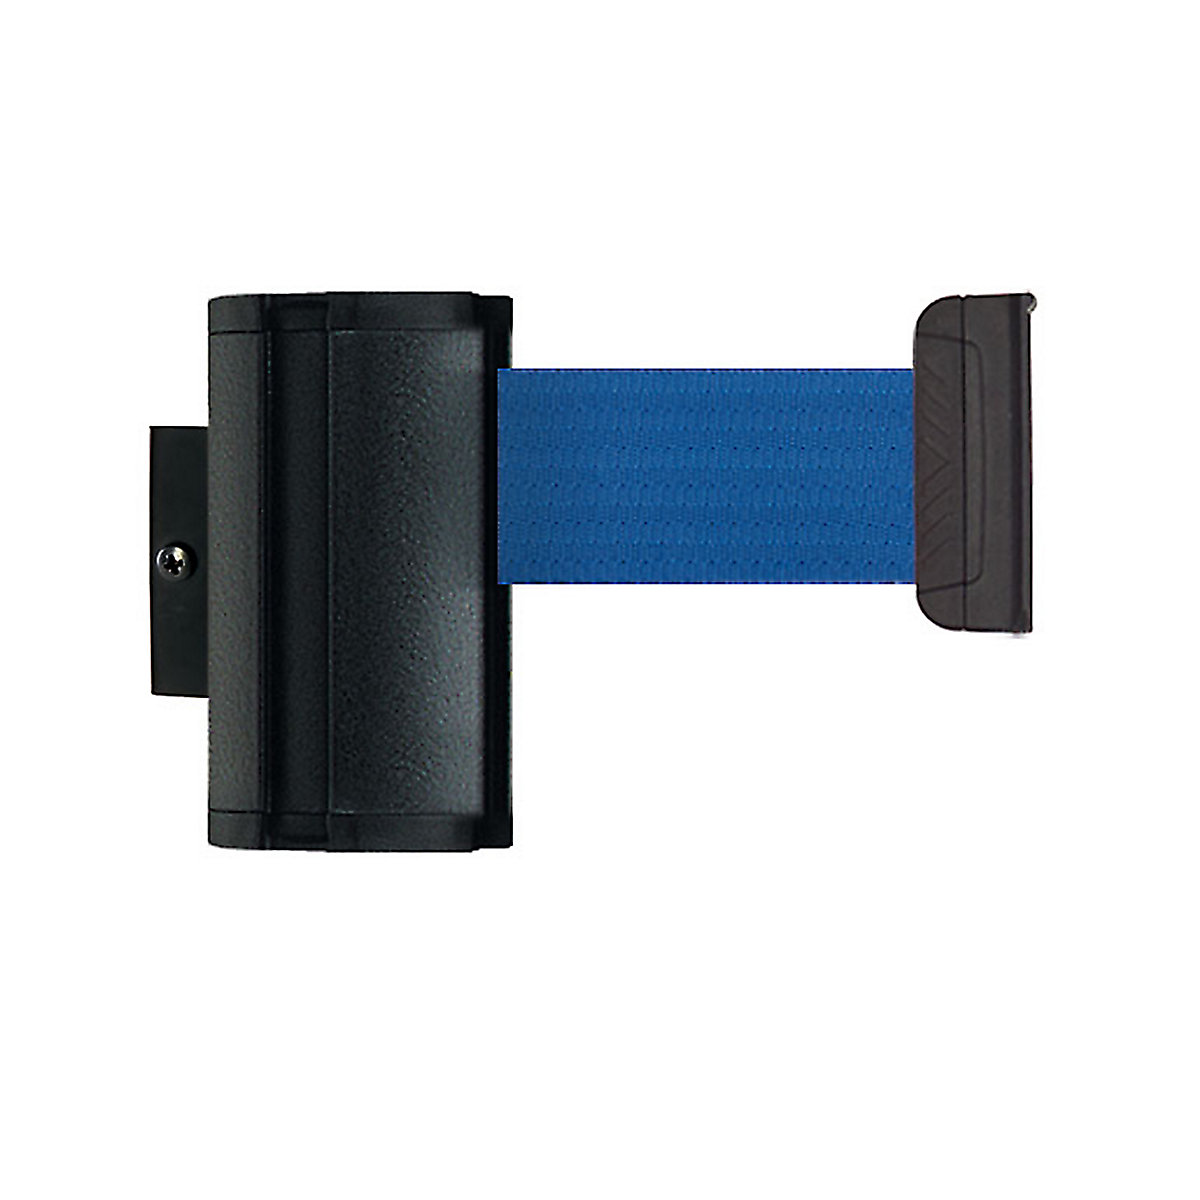 Bandcassette Wall Mount, uittreklengte max. 3700 mm, bandkleur blauw-6